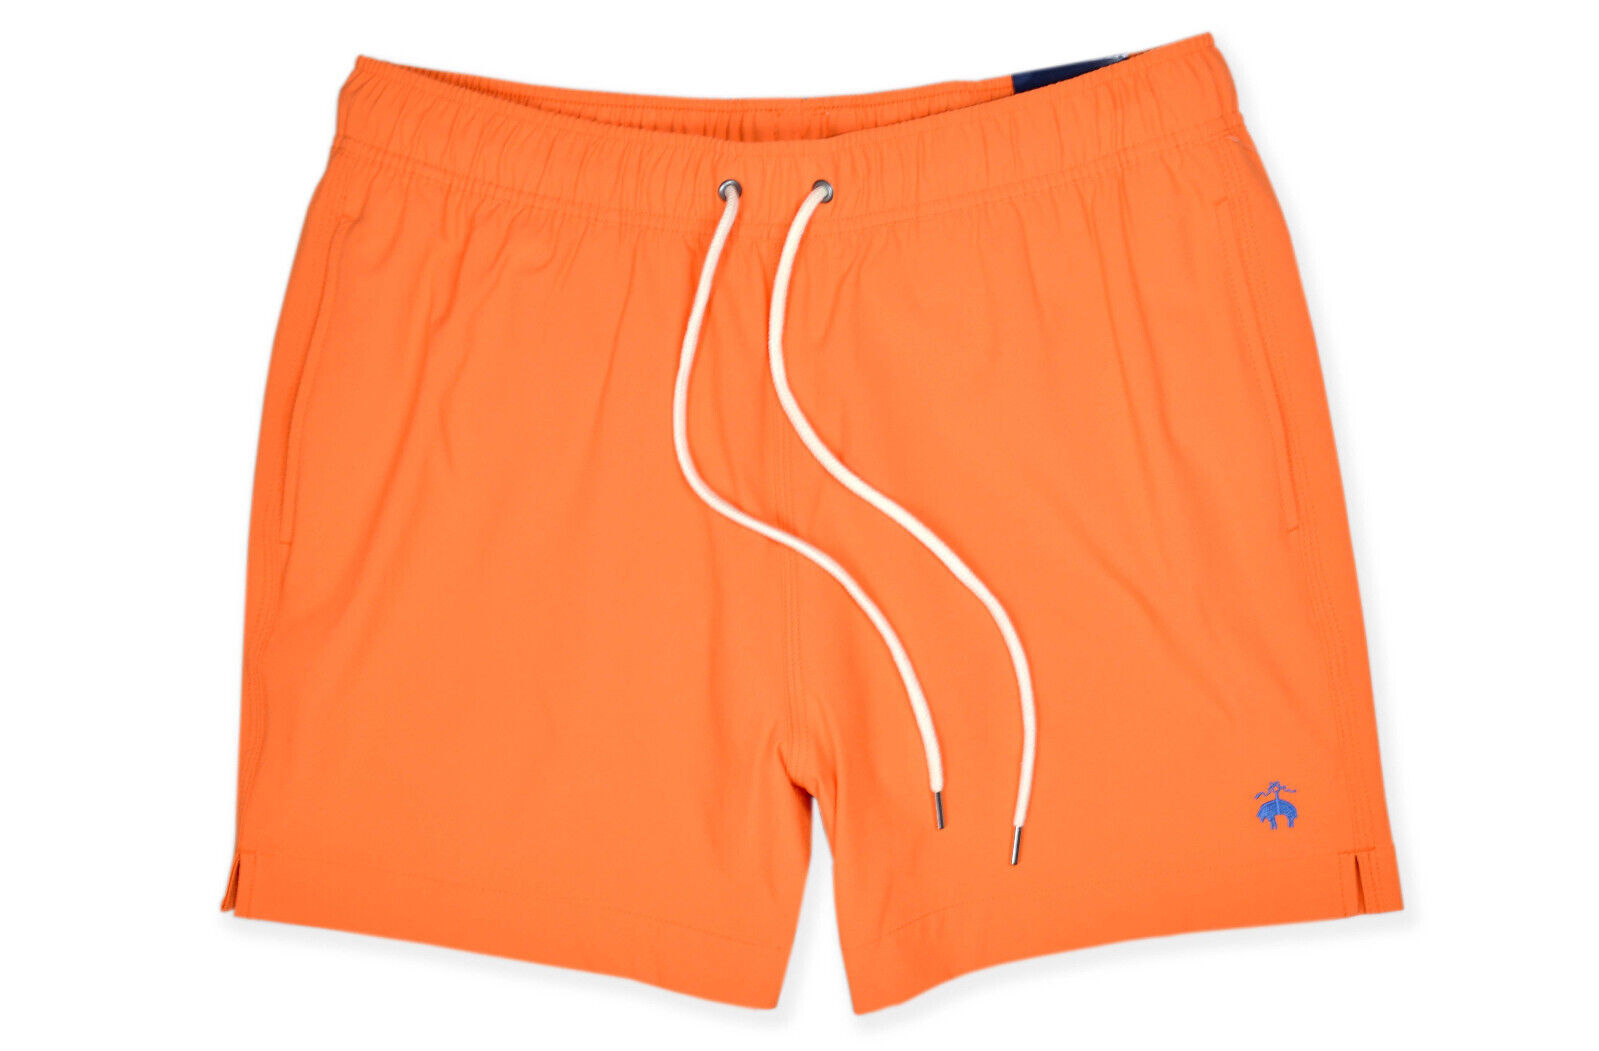 Primary image for Brooks Brothers Orange 5" Emb Montauk Swim Trunk Shorts, L Large 8629-10